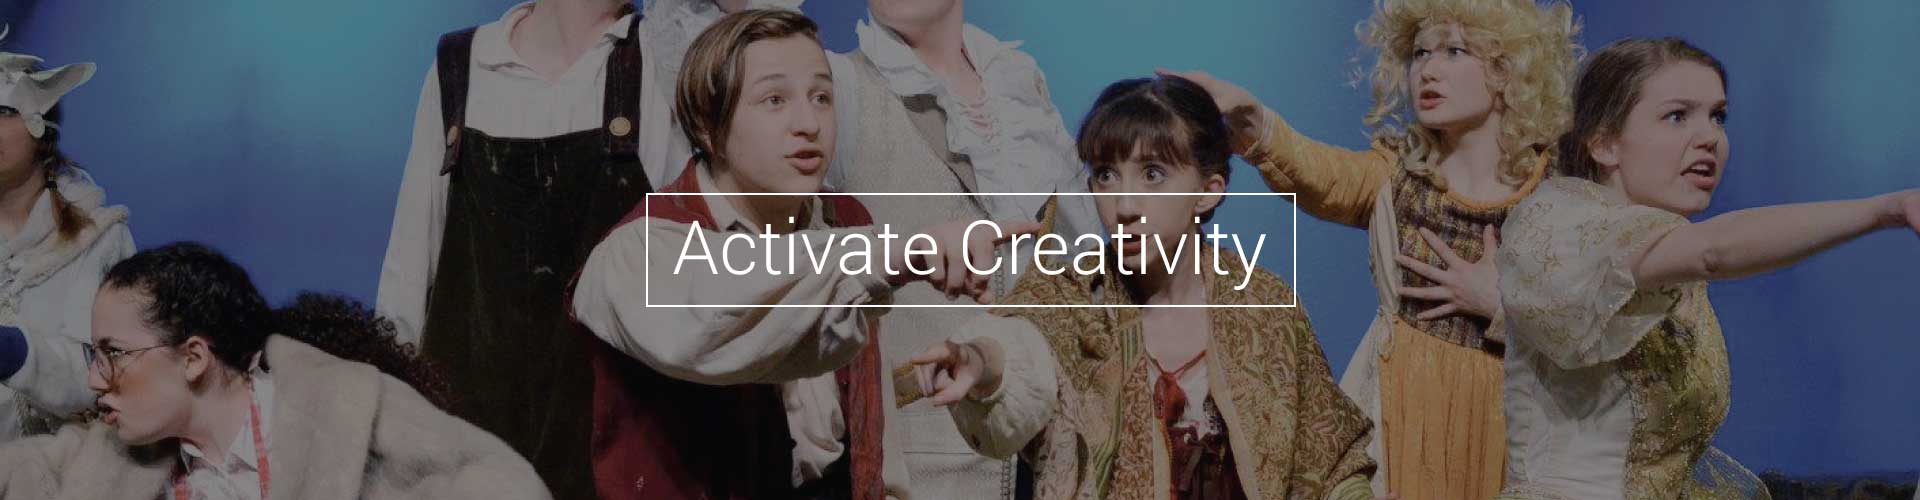 Activate Creativity at Studio East